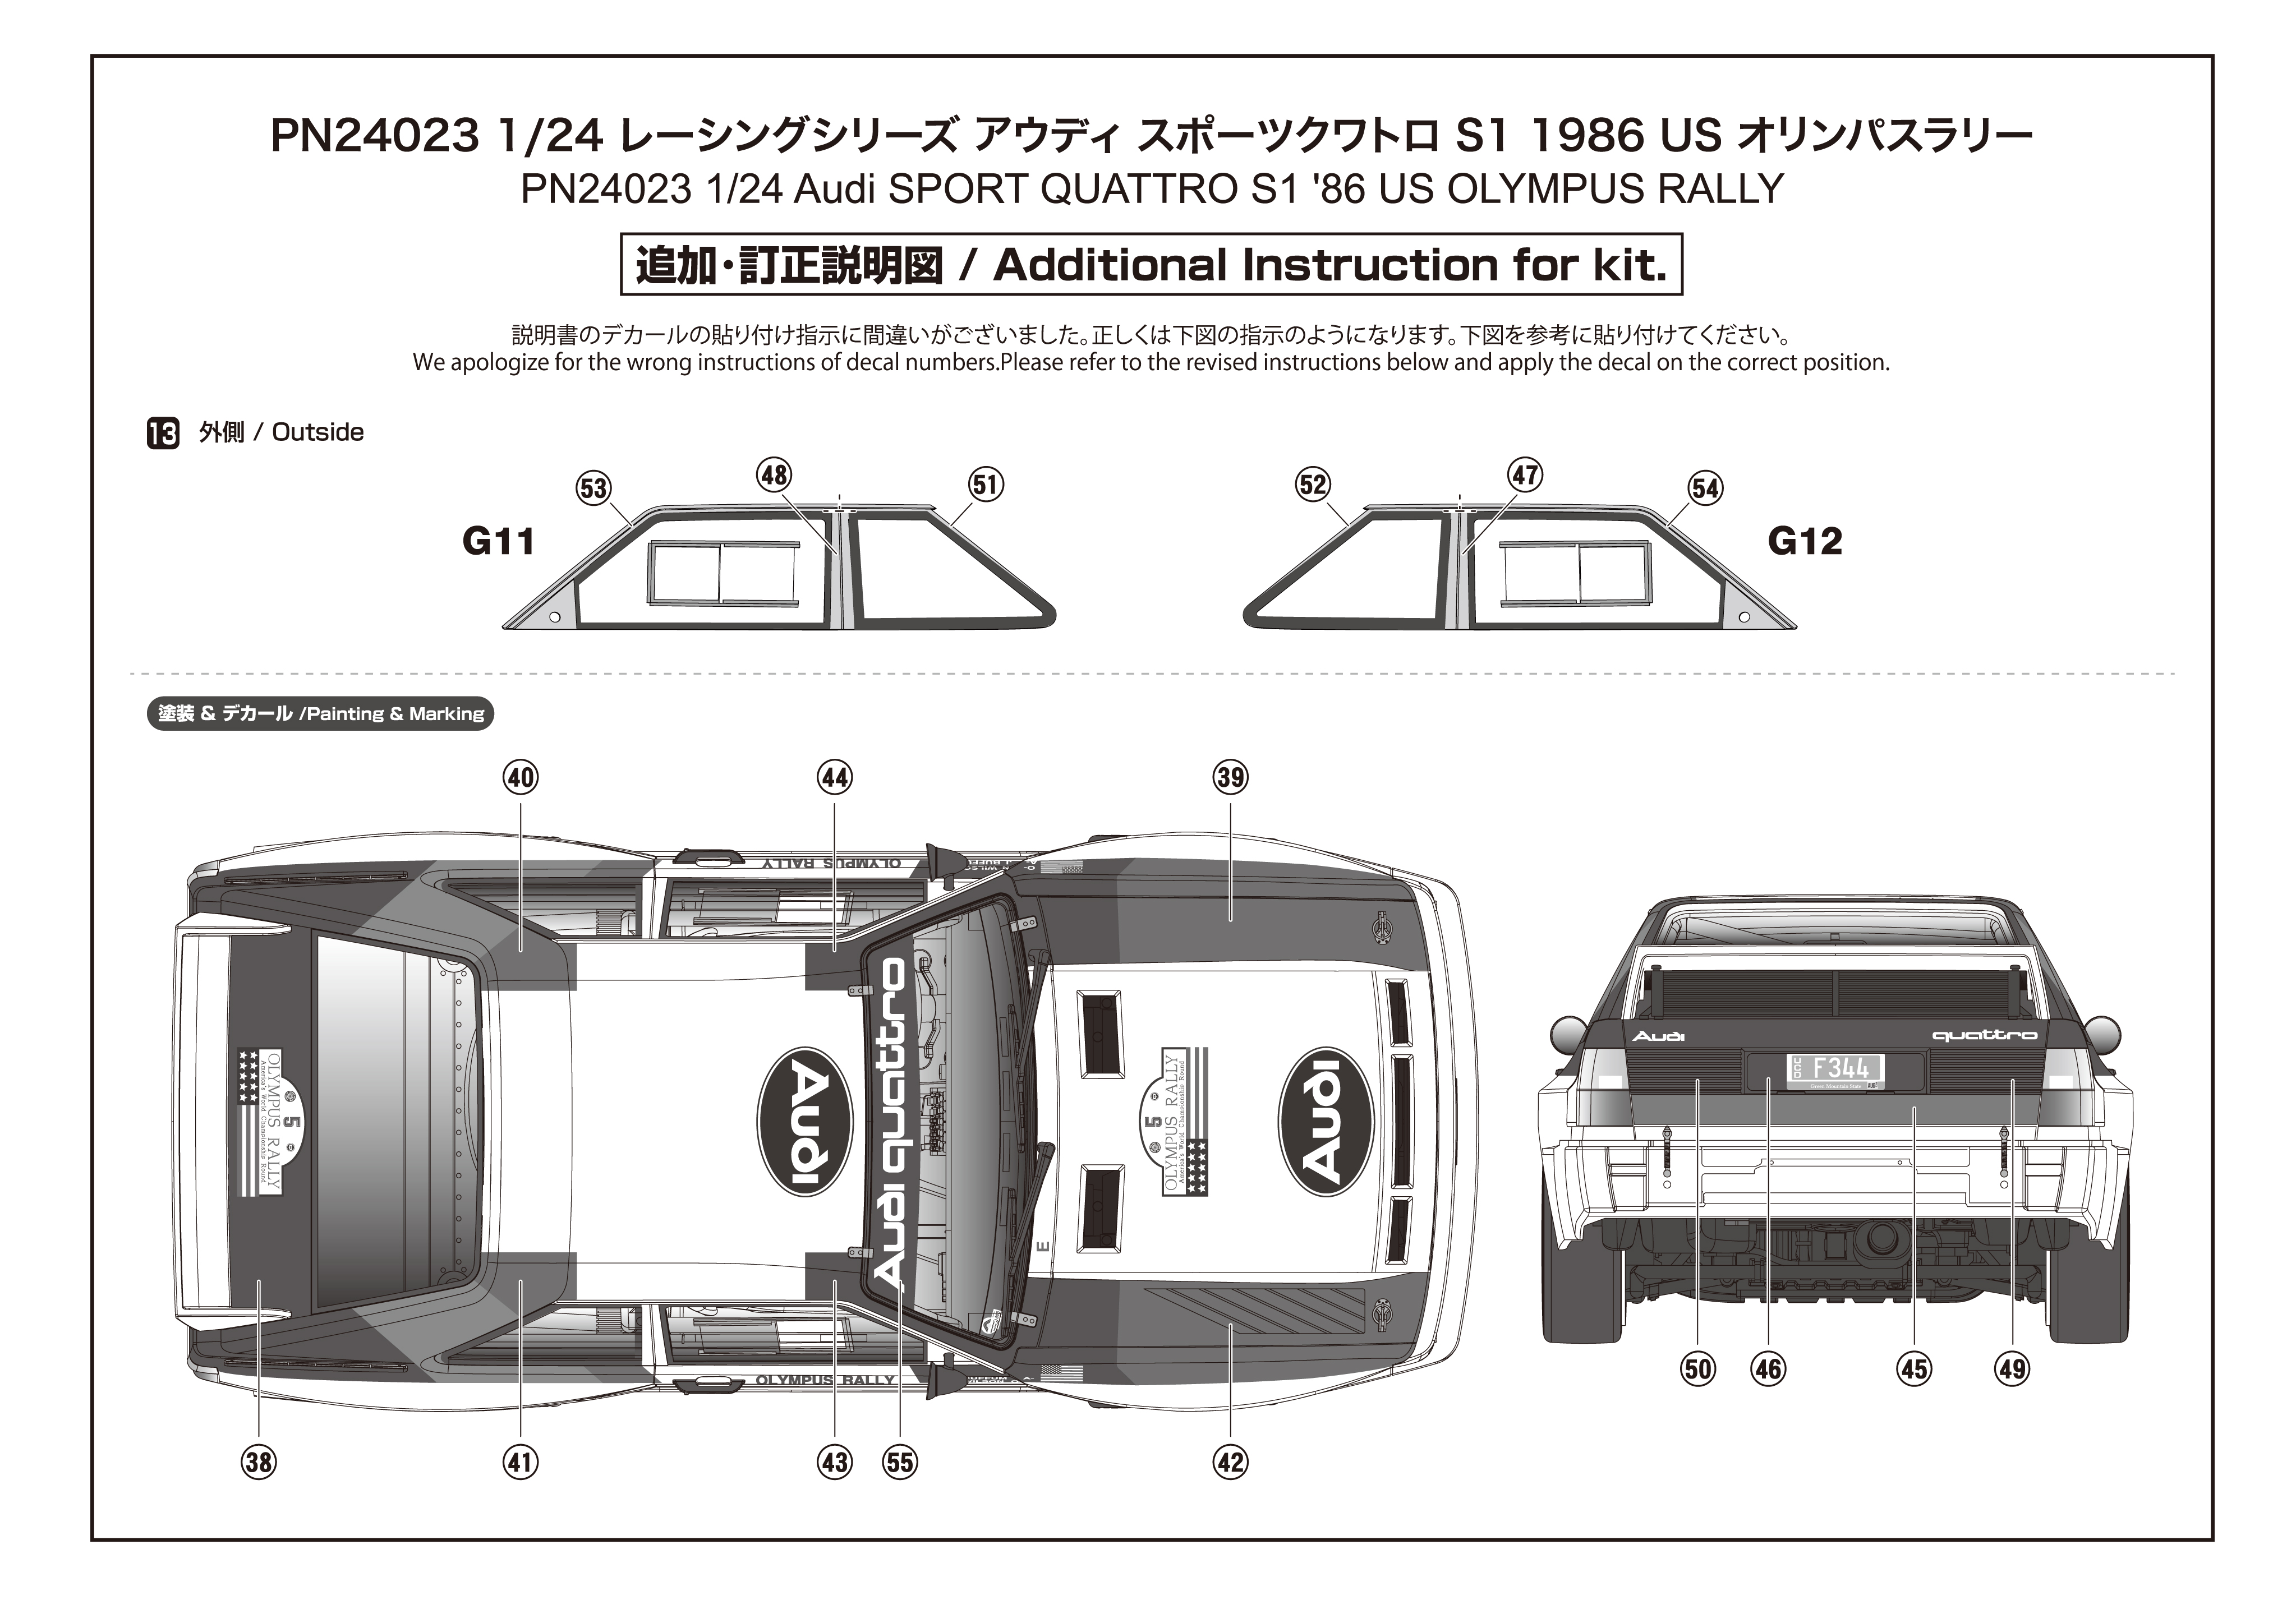 PLATZ / NUNU 1/24 Audi Sport Quattro S1 ‘86 US Olympus Rally